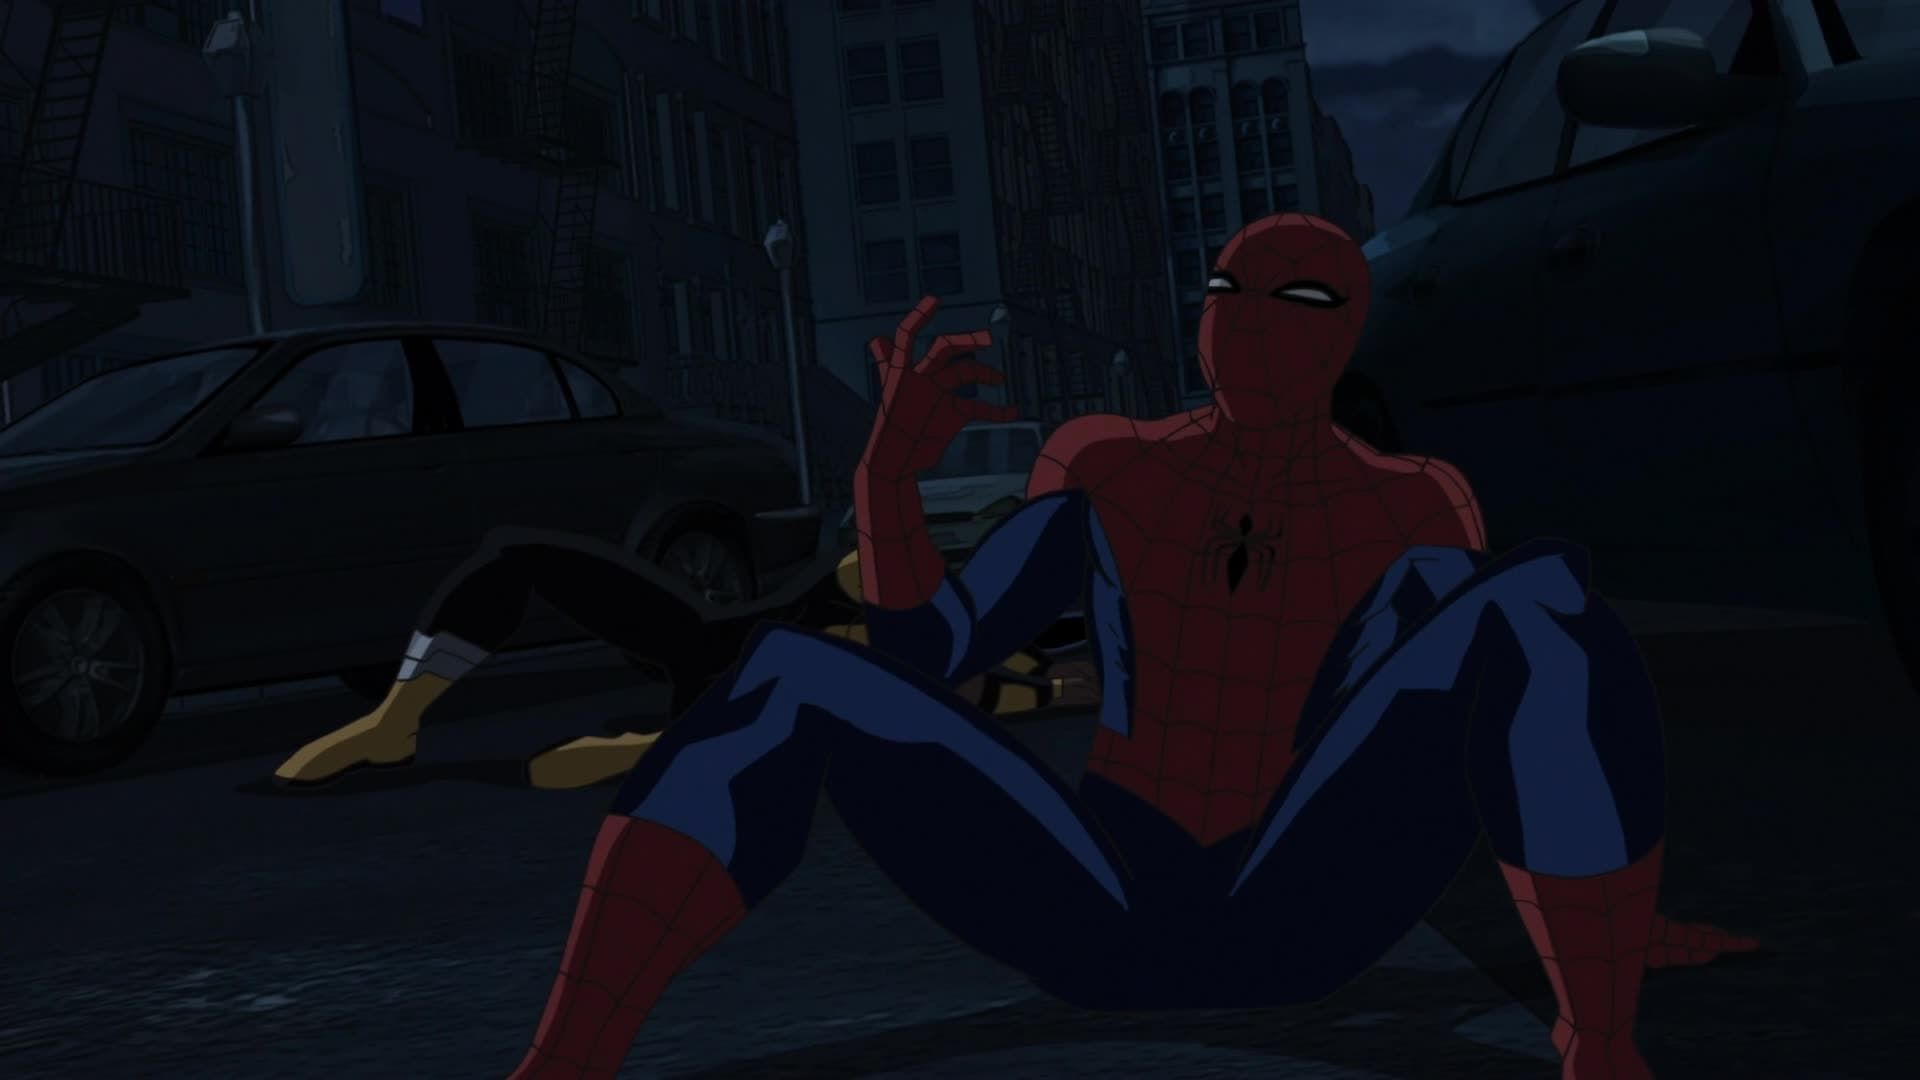 Ultimate Spider-Man background